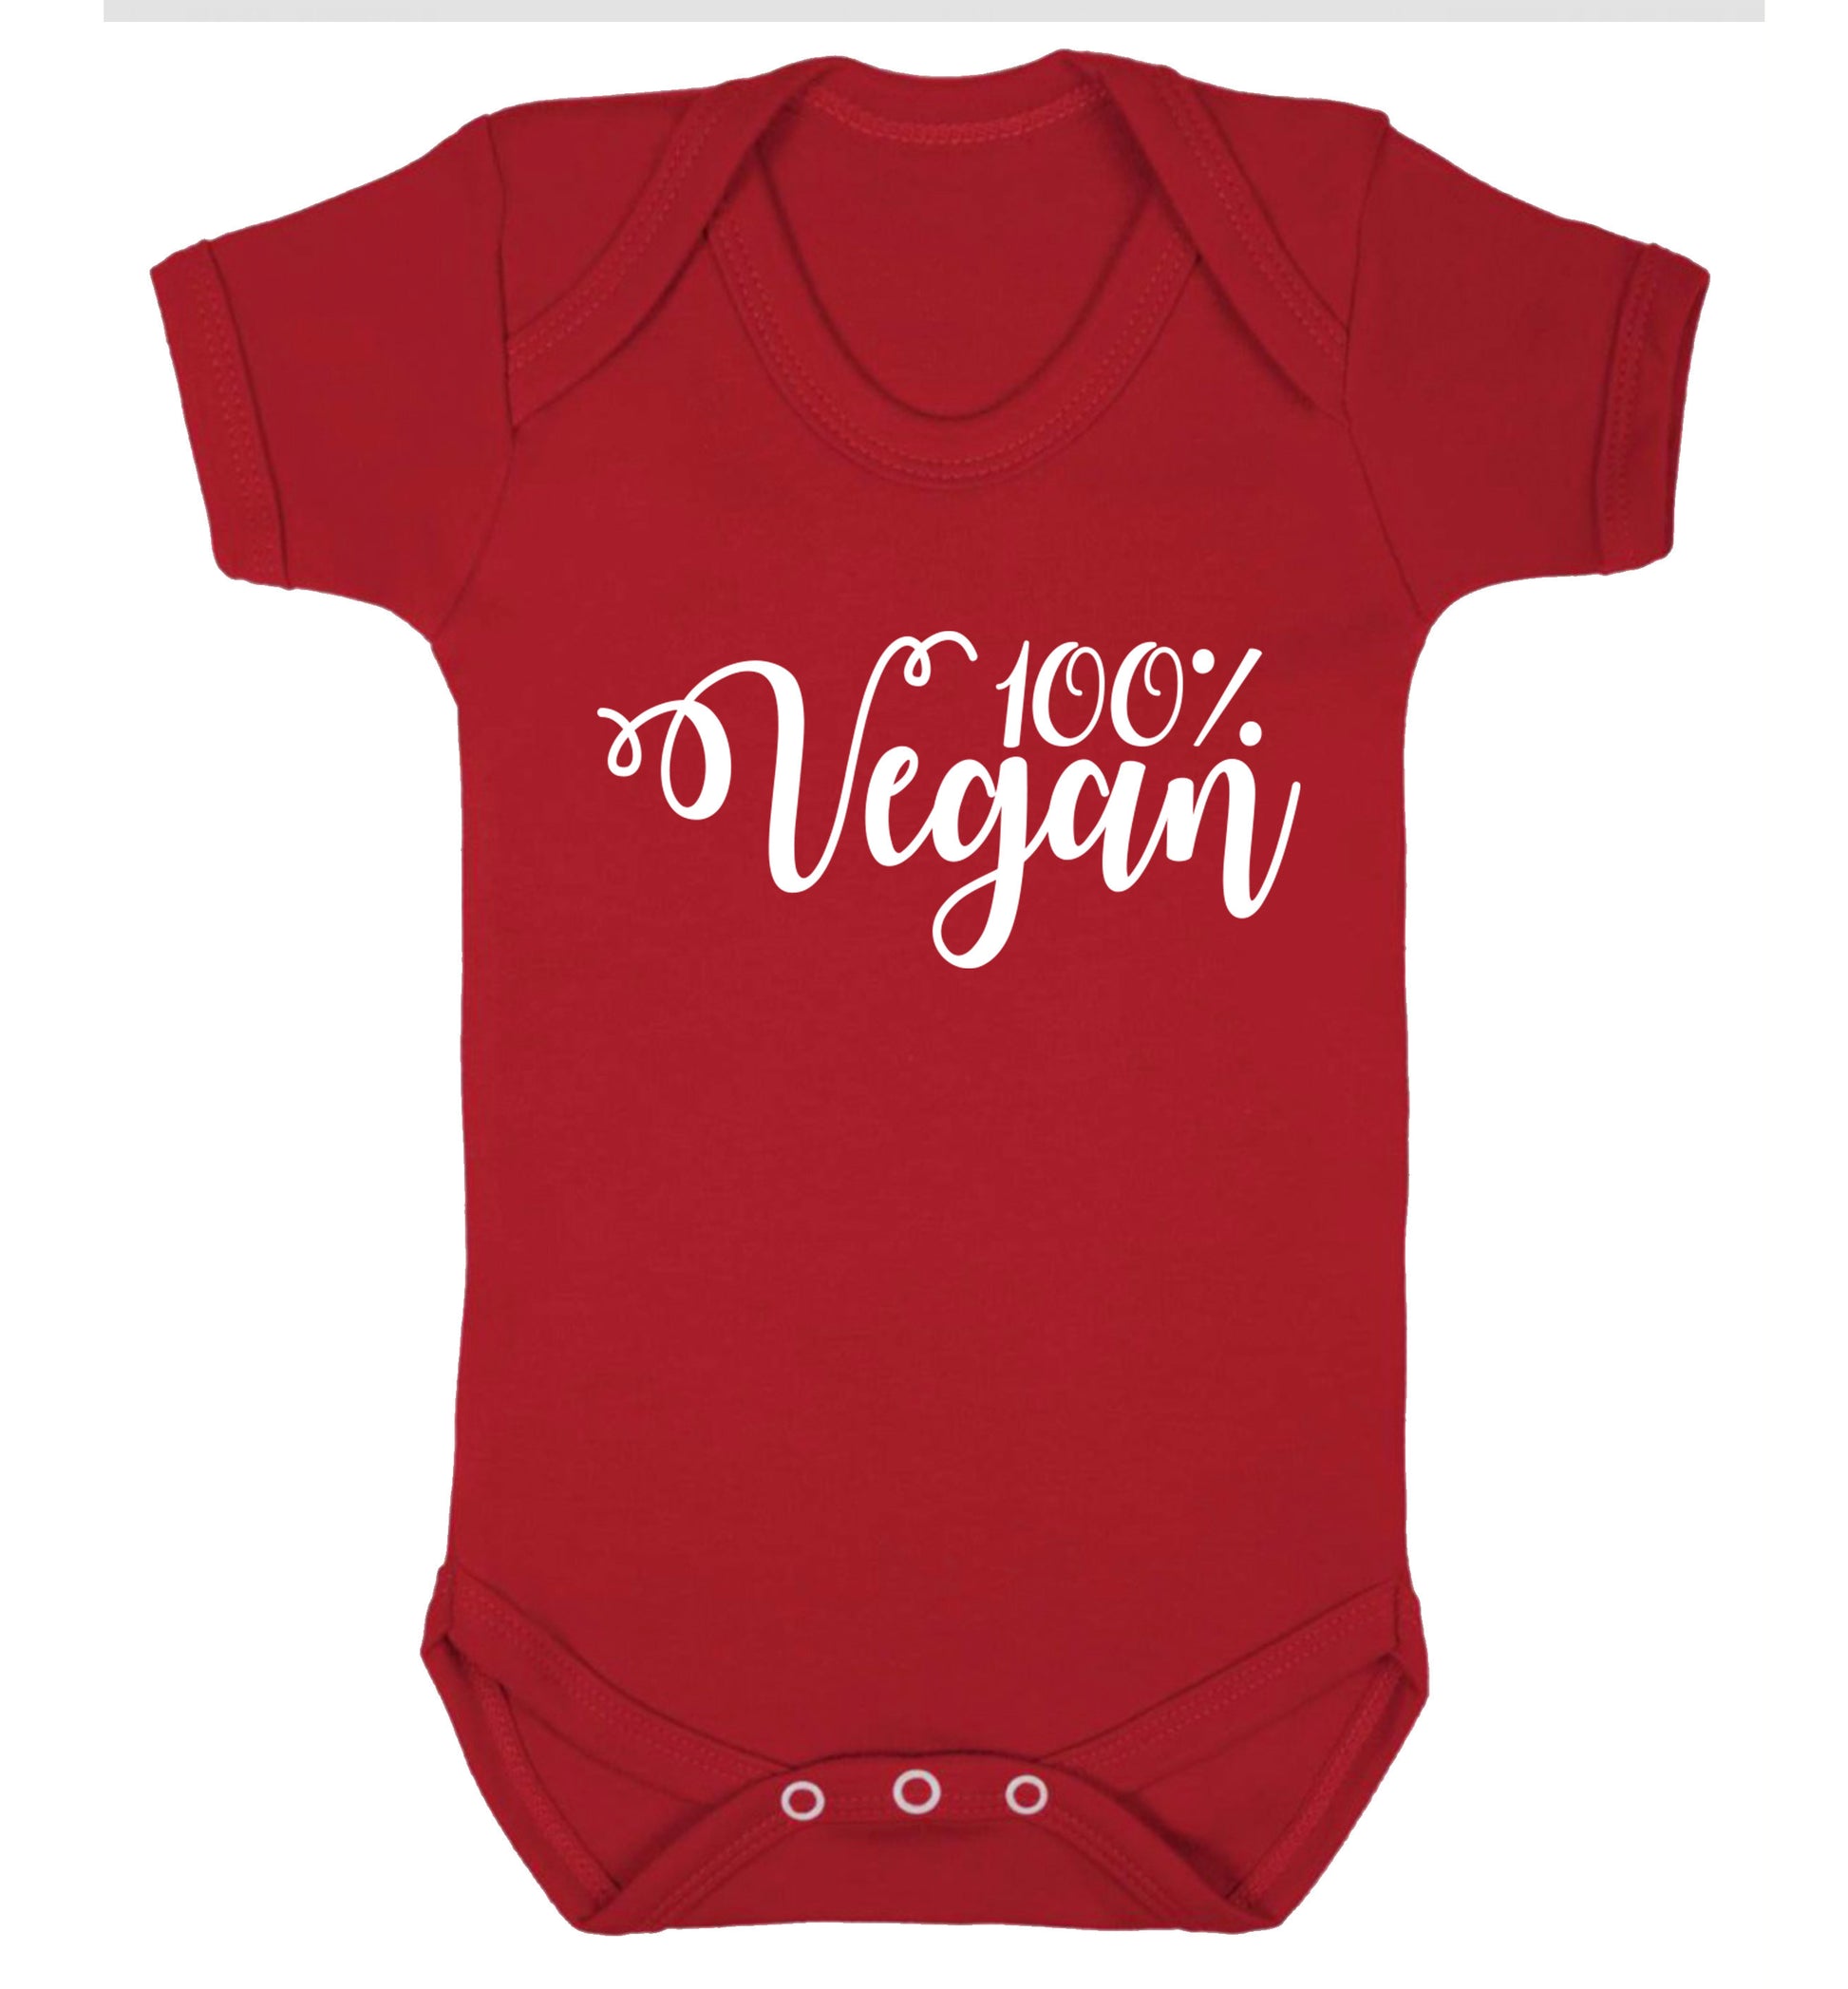 100% Vegan Baby Vest red 18-24 months